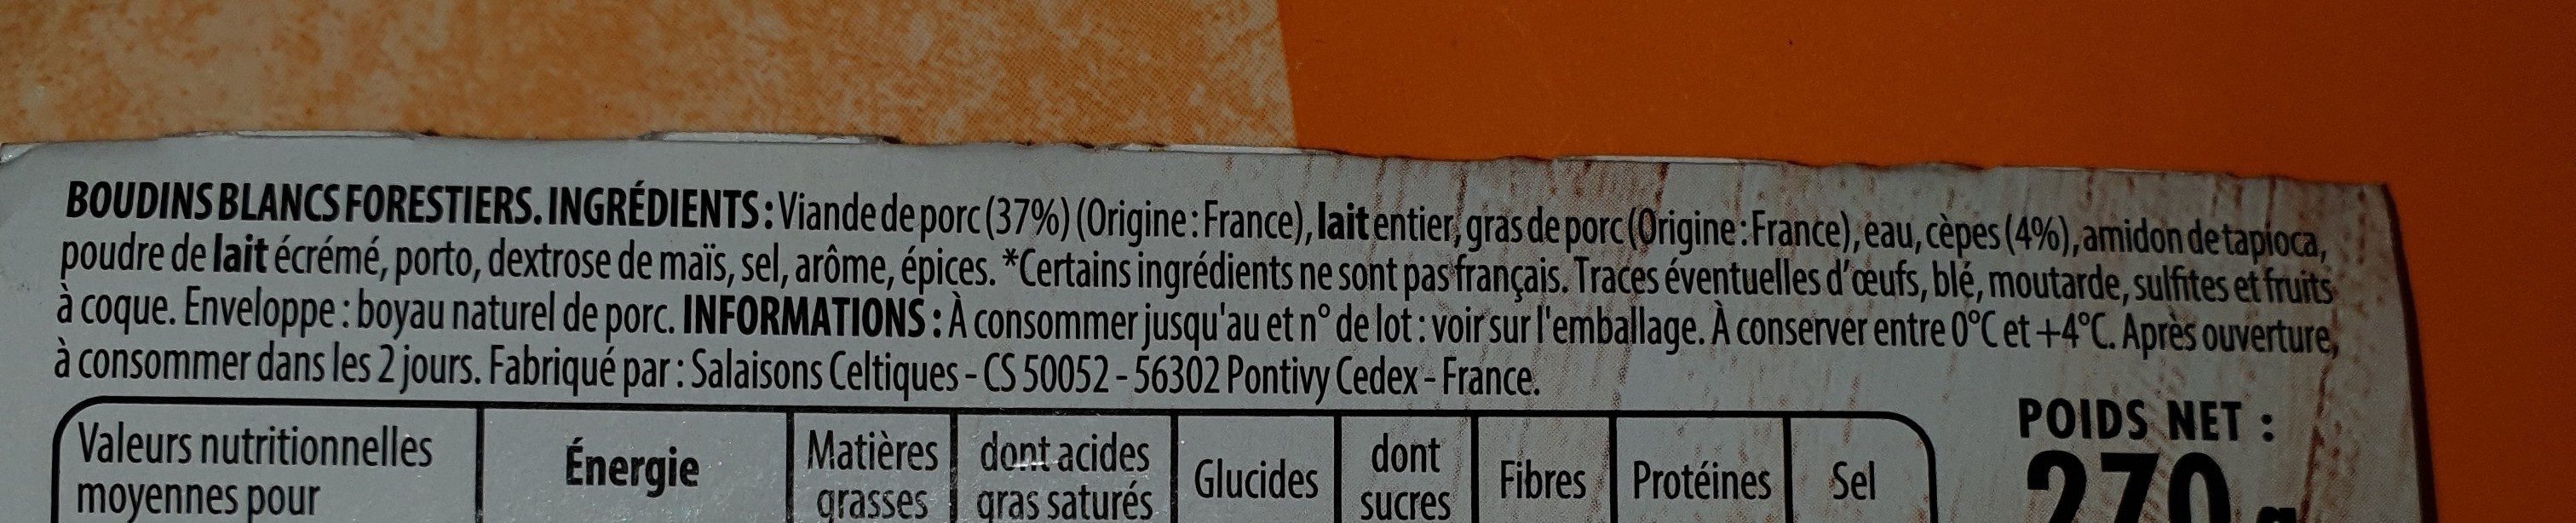 Boudin blanc forestier - Ingredients - fr